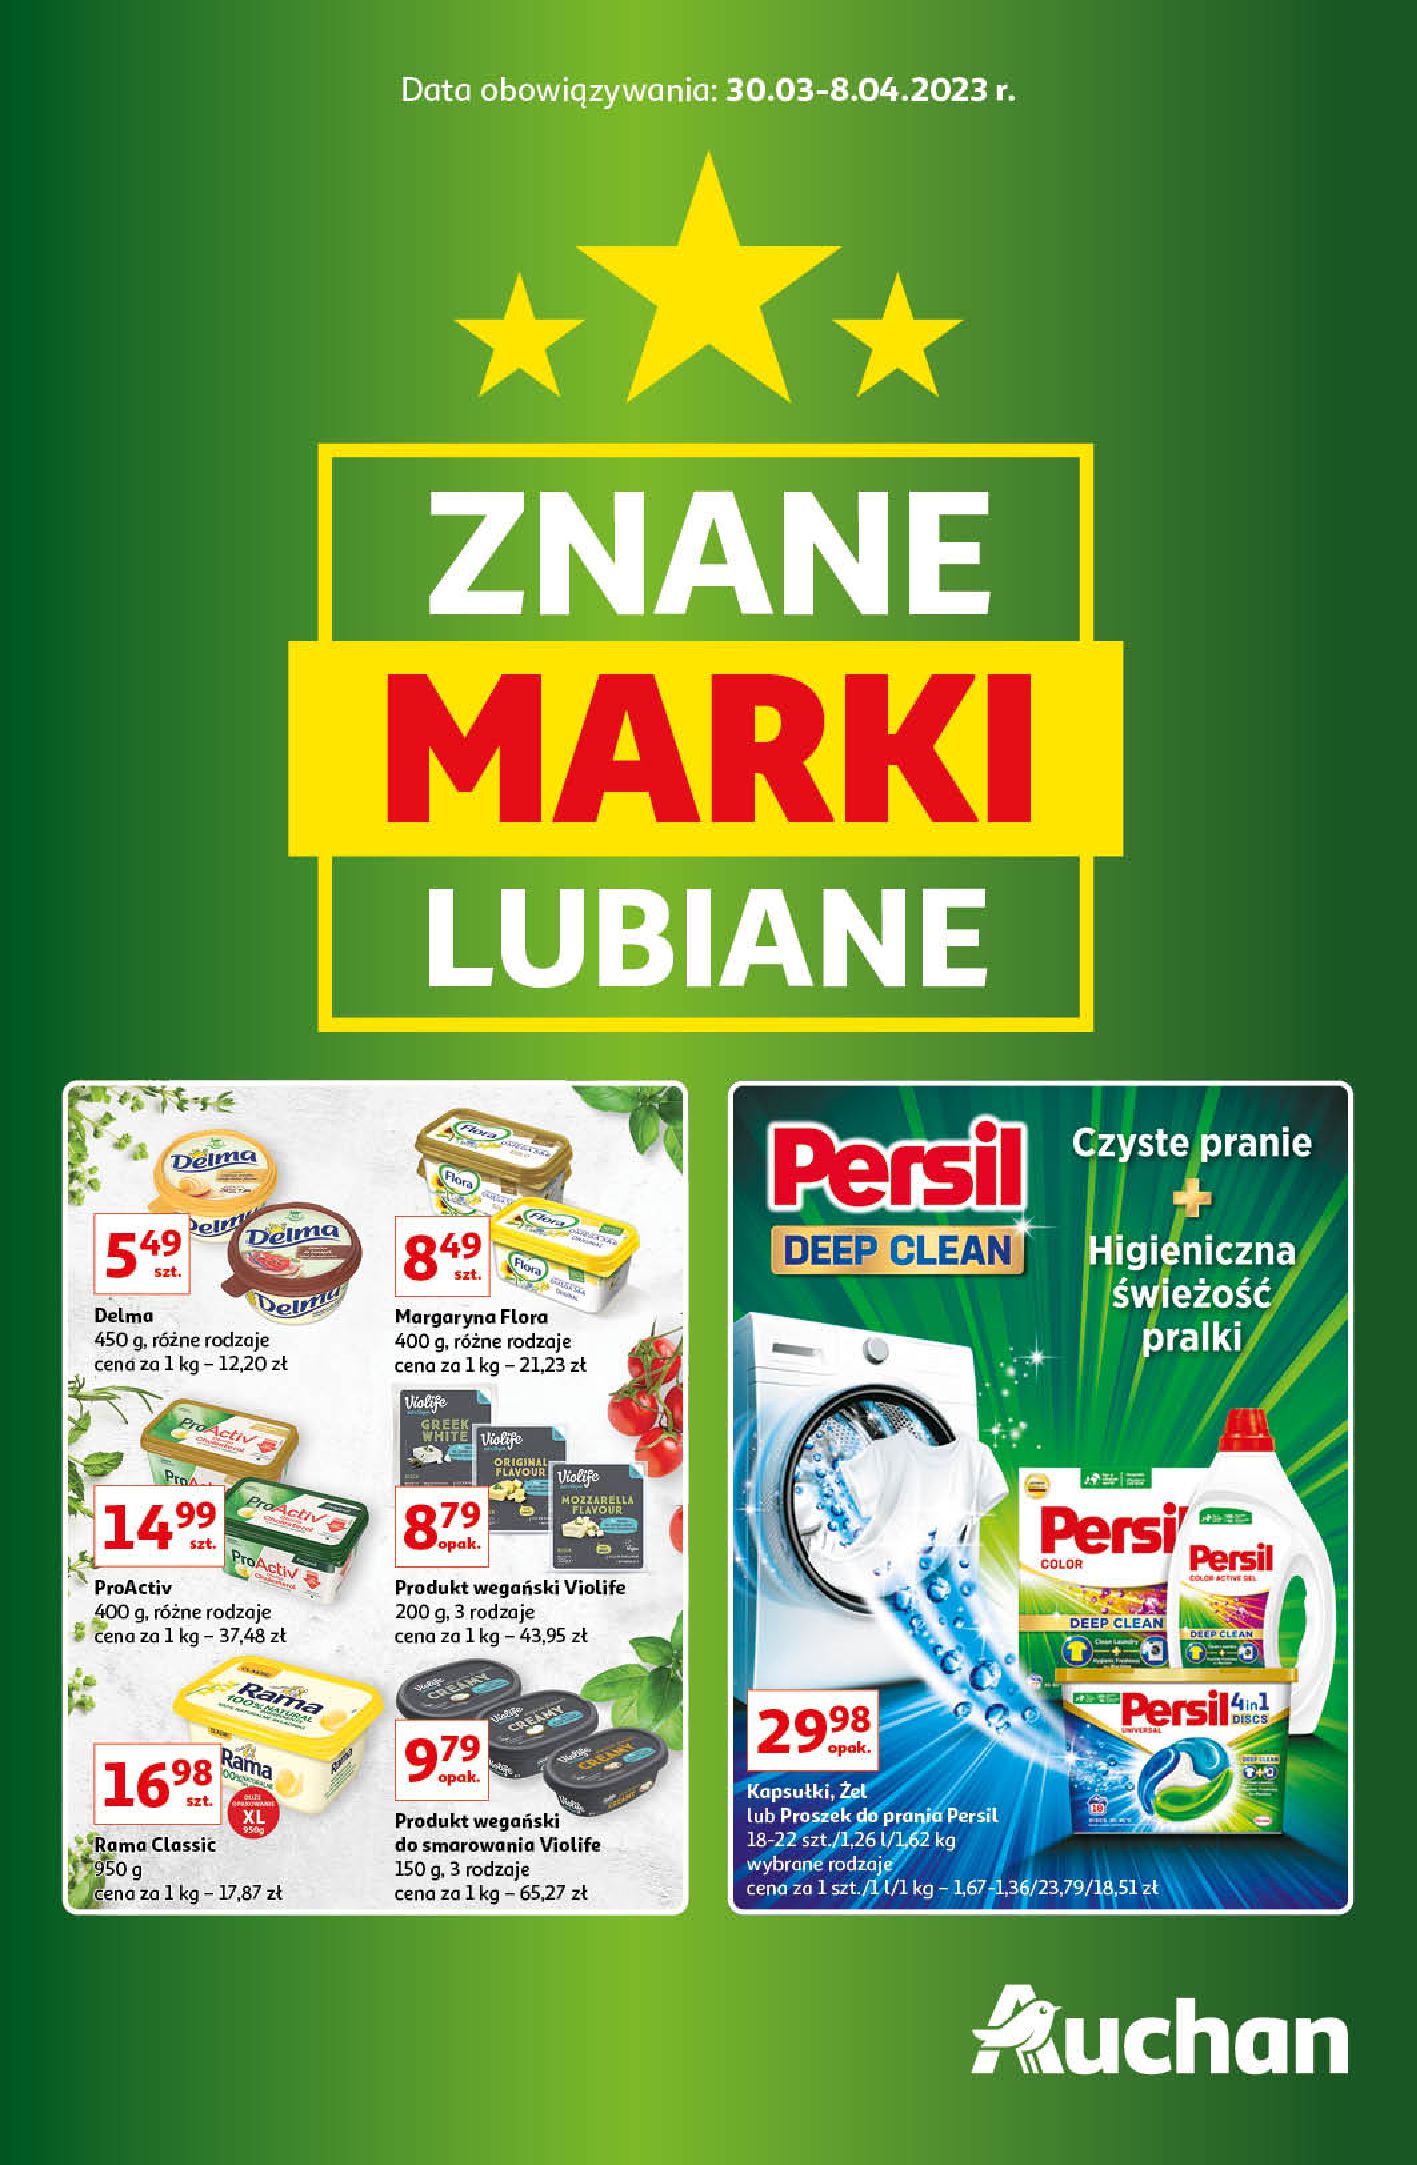 Auchan:  Gazetka Auchan - Znane marki lubiane 29.03.2023